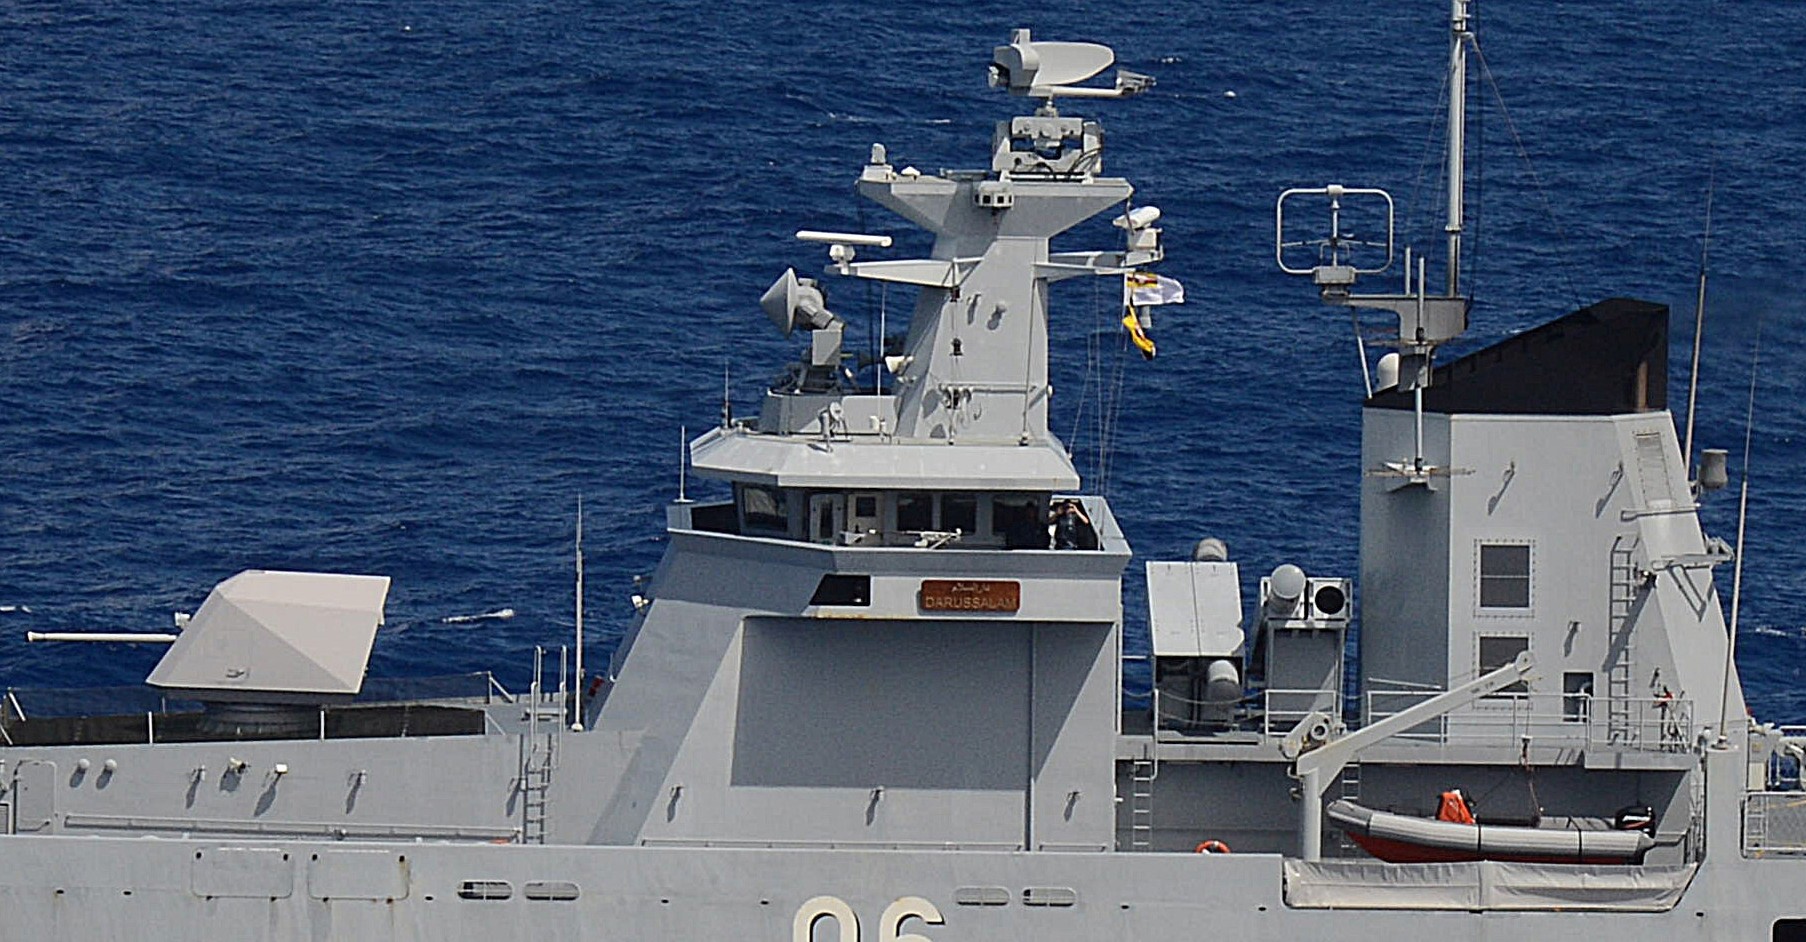 opv 06 kdb darussalam offshore patrol vessel royal brunei navy armament 02